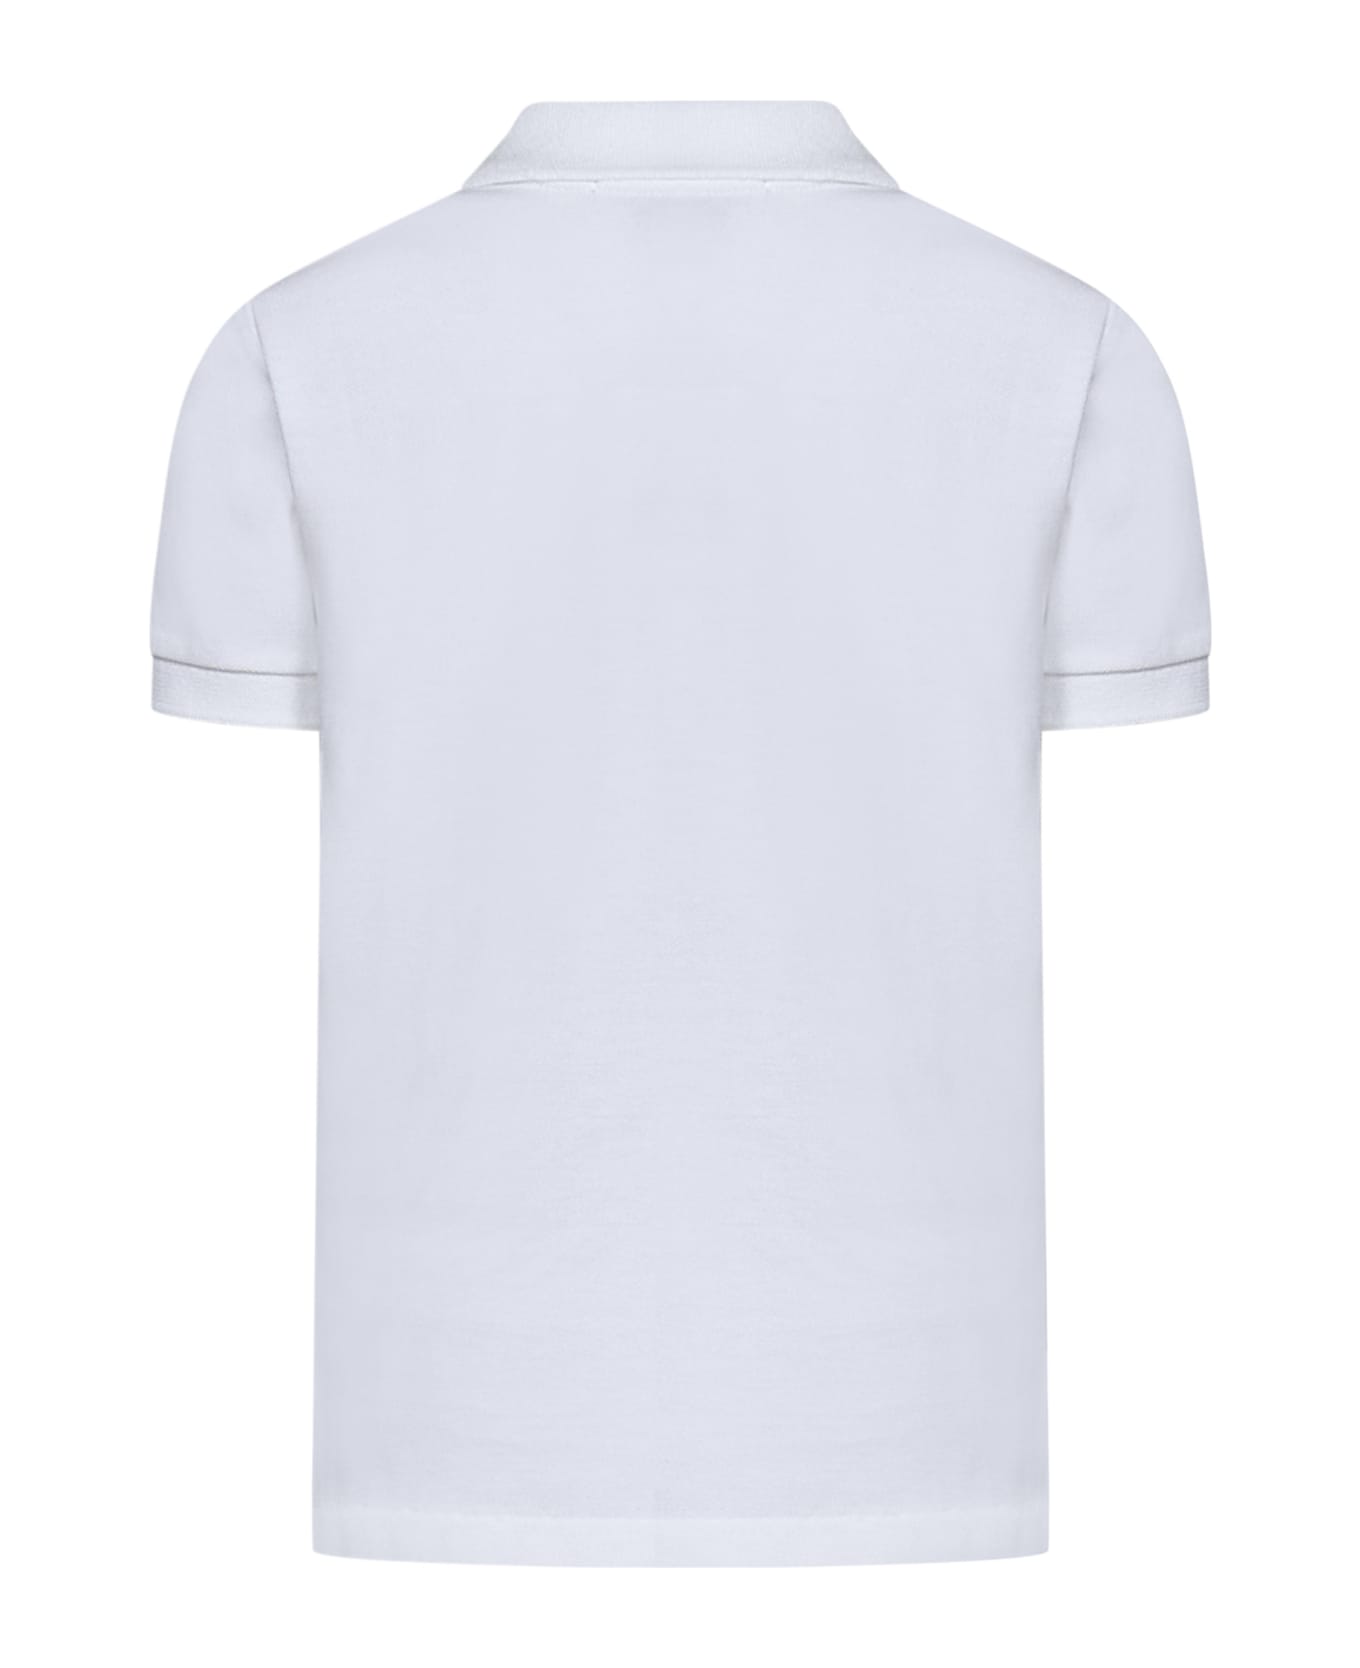 Polo Ralph Lauren Kids Polo Shirt - White